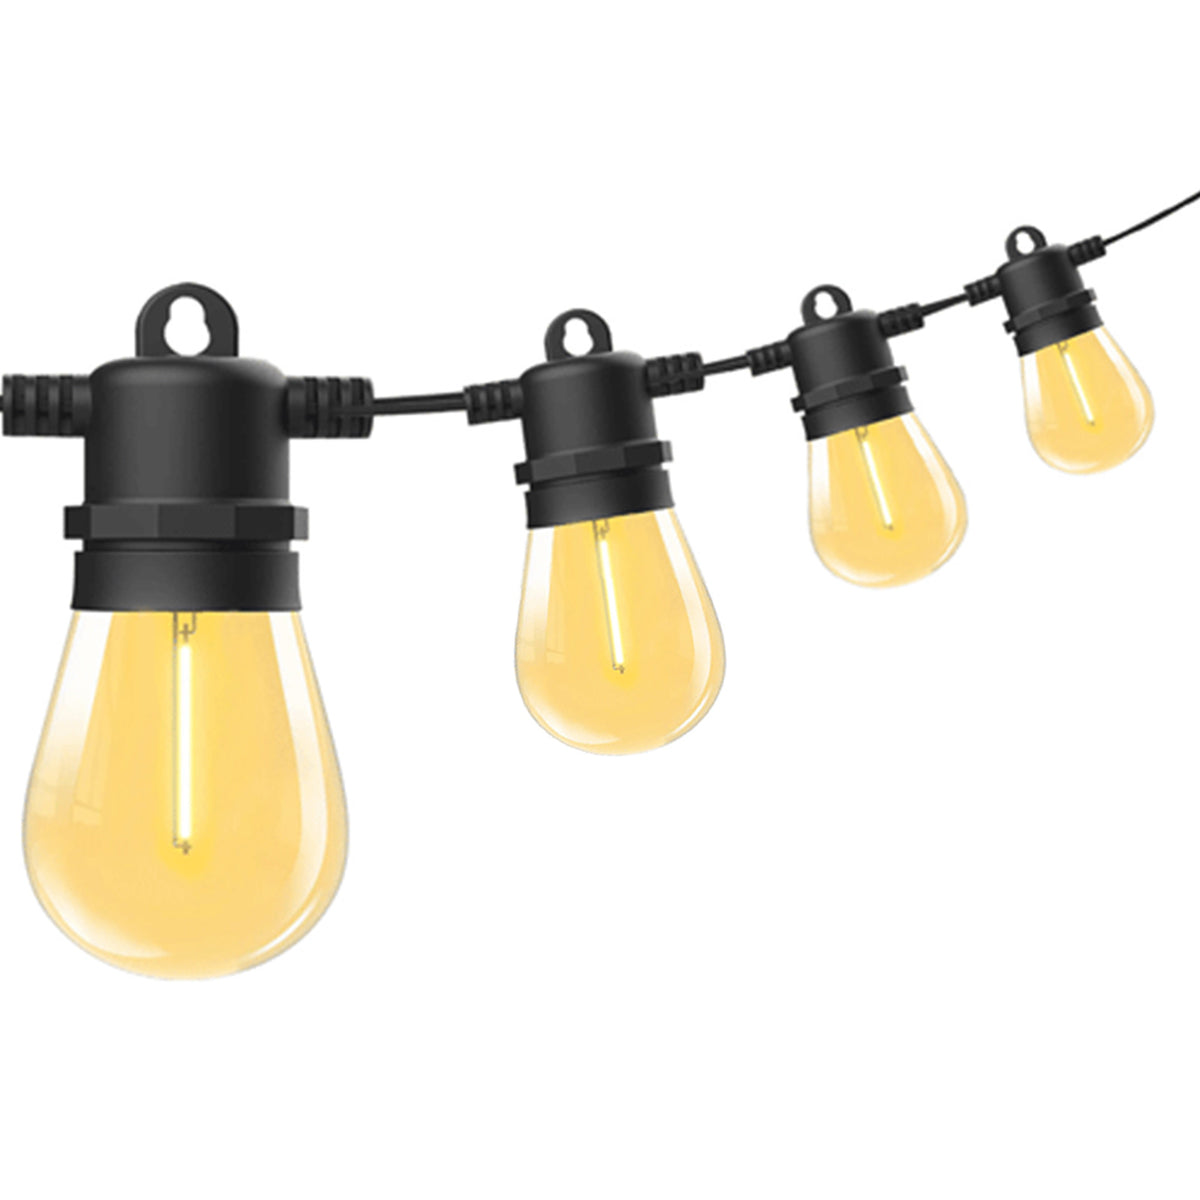 Sansai 30 Bulbs 32M Festoon String Lights LED Waterproof Outdoor - Outdoorium